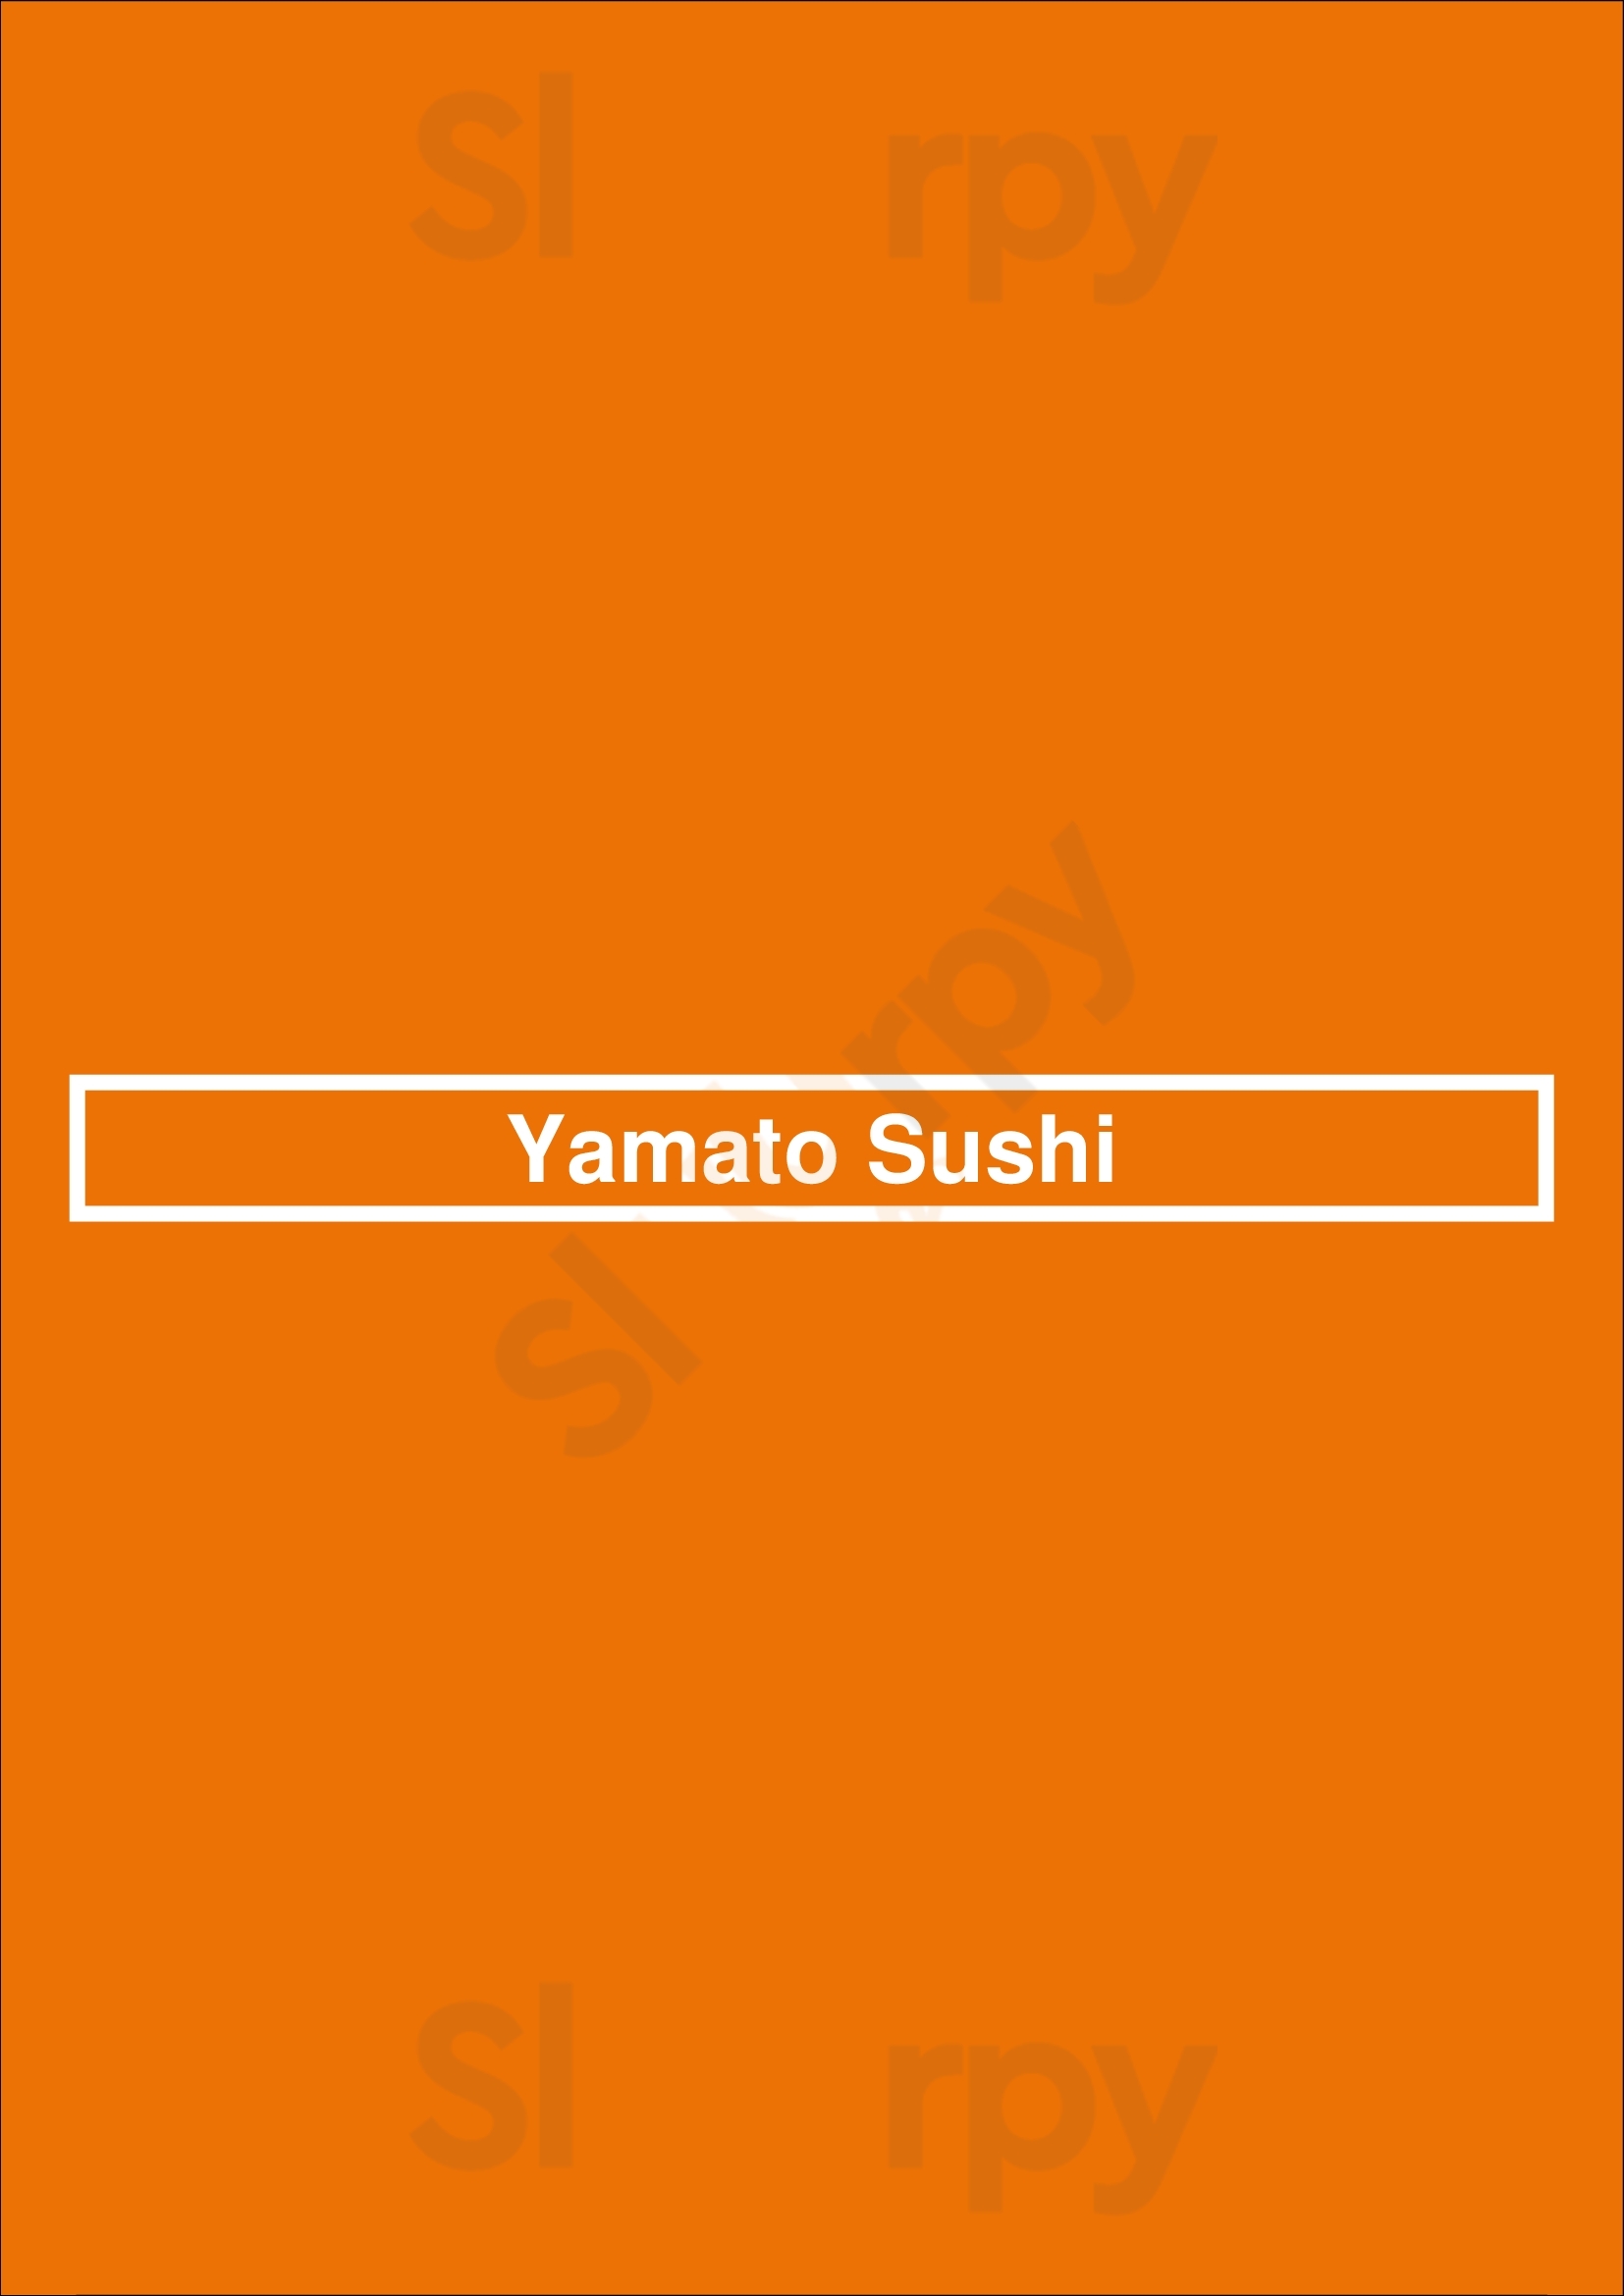 Yamato Sushi Vancouver Menu - 1